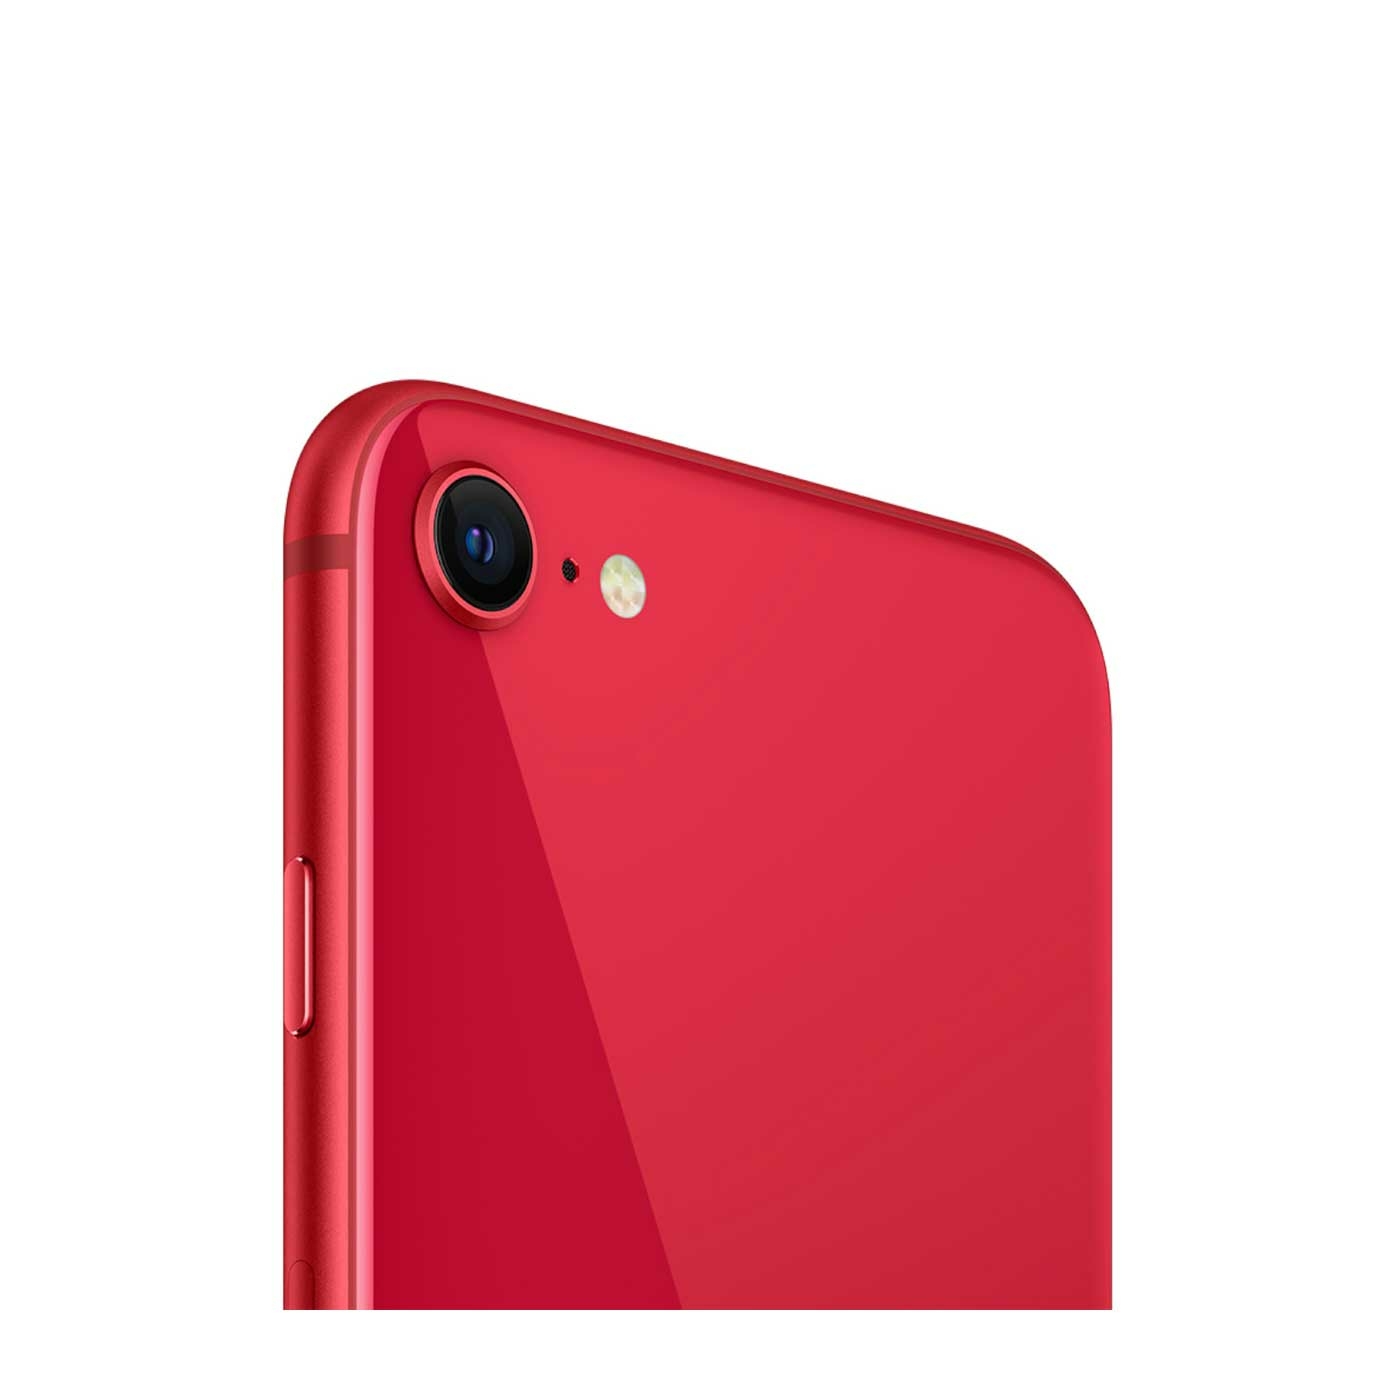 iPhone SE 256GB Rojo